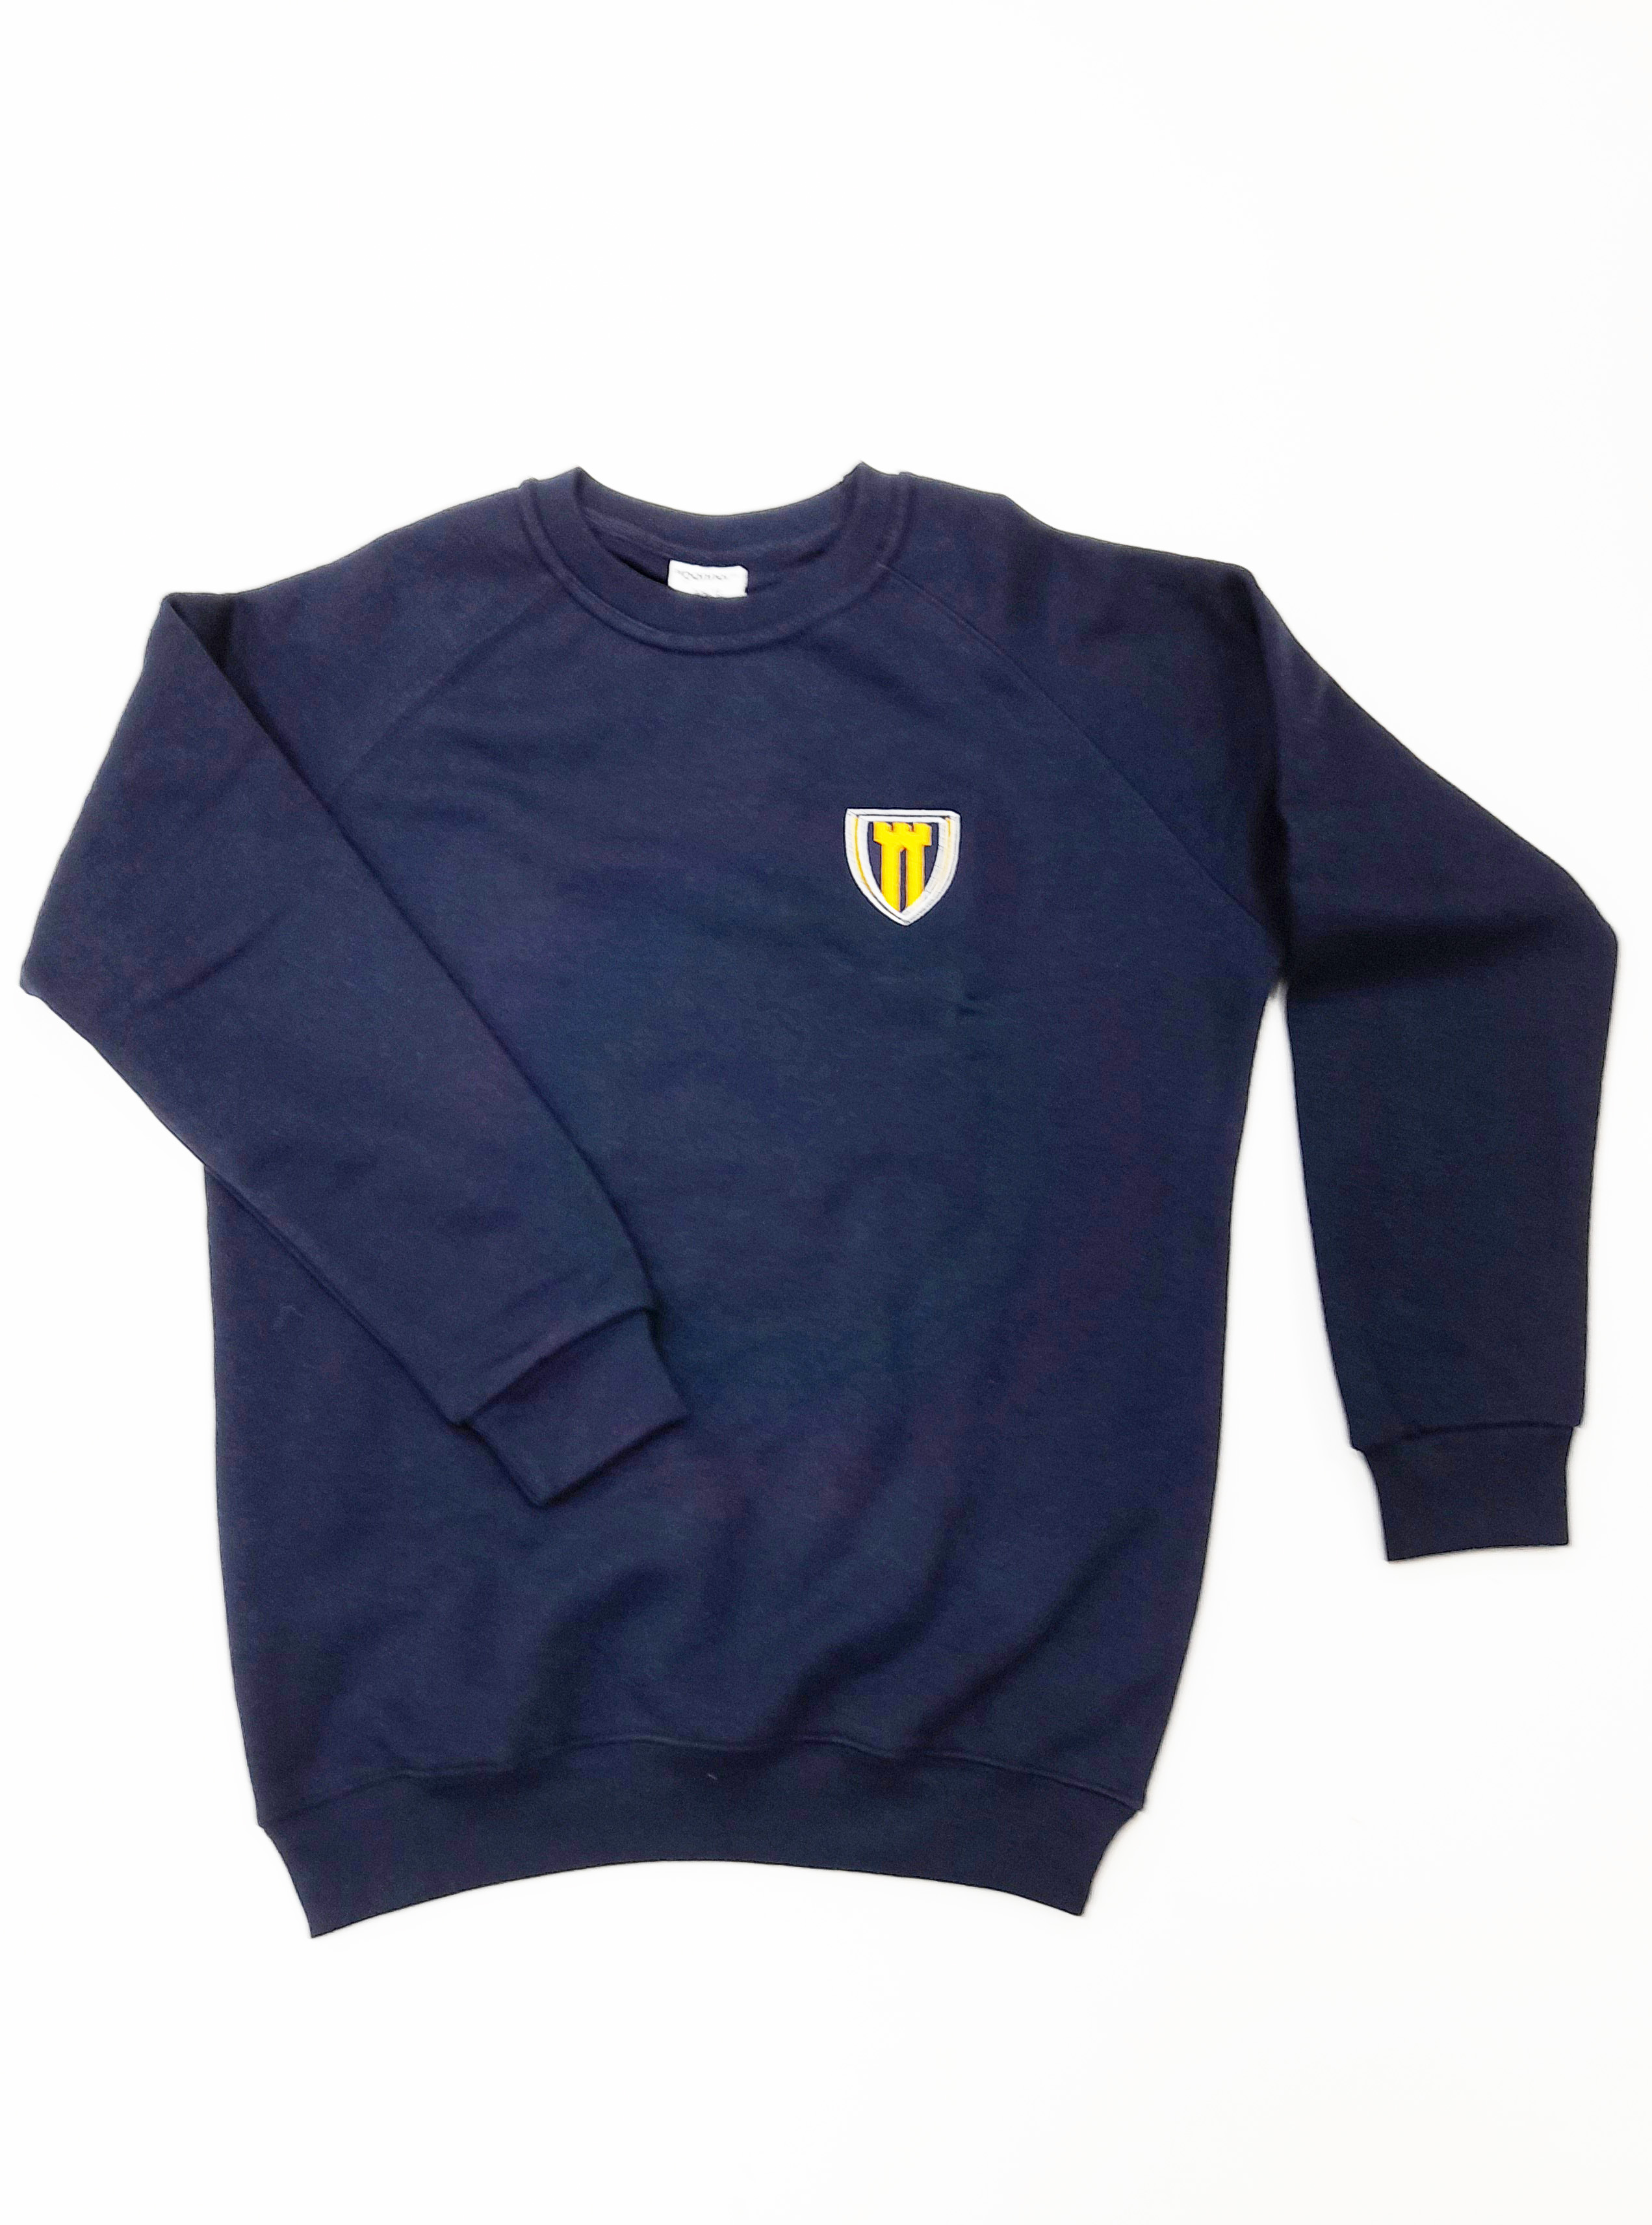 Castle Newnham Secondary PE Sweatshirt (Navy)